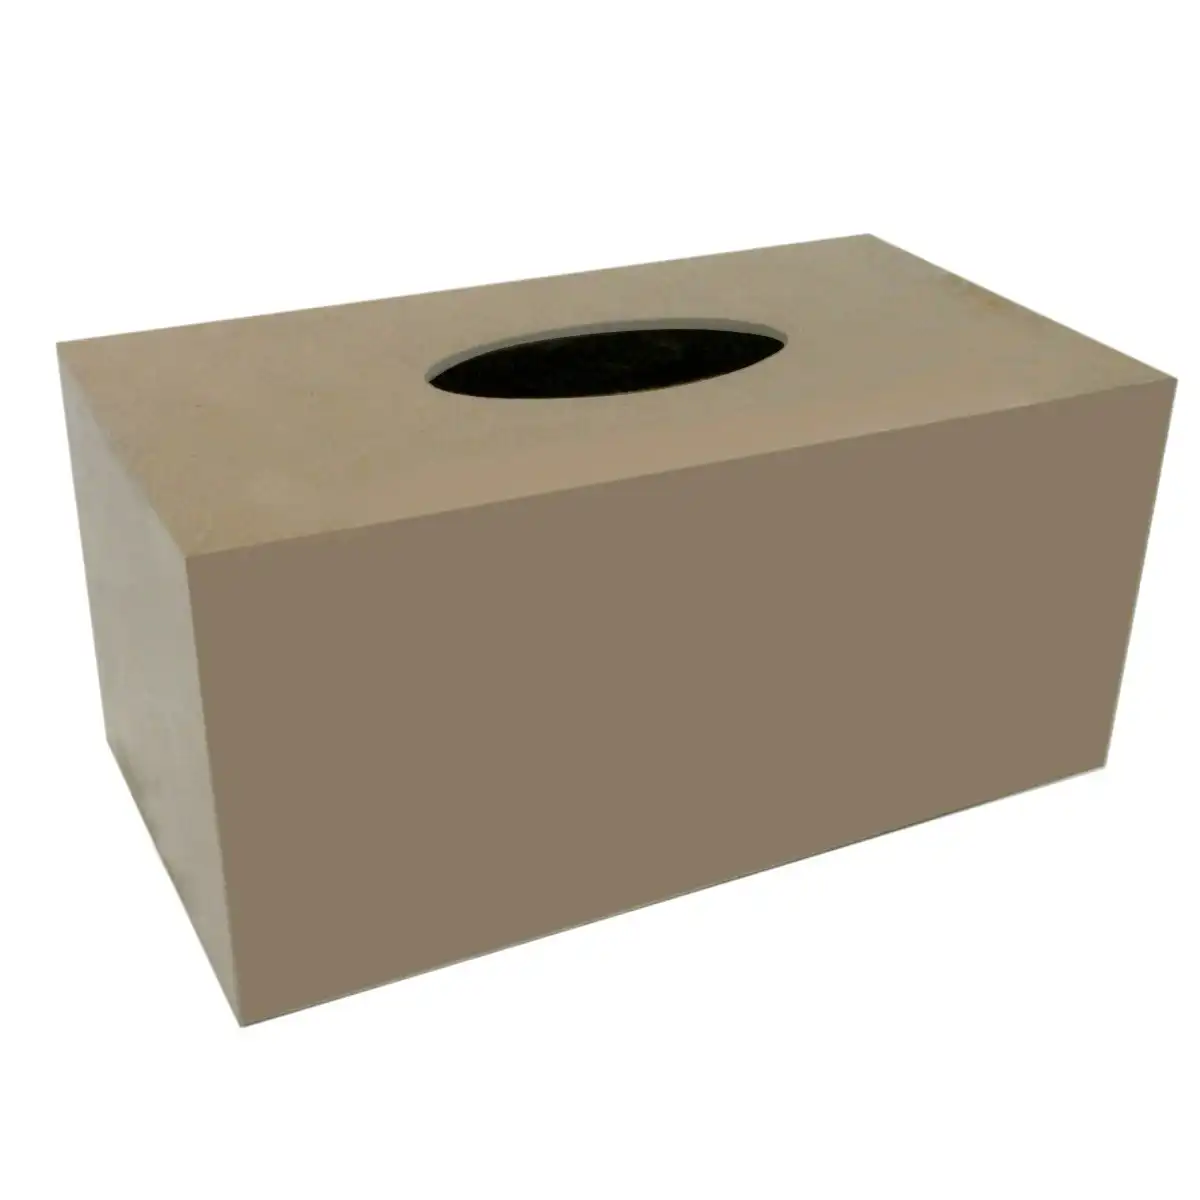 Boyle Craftwood 24x13cm Wooden Tissue Box Cover DIY Craft Storage Large Brown